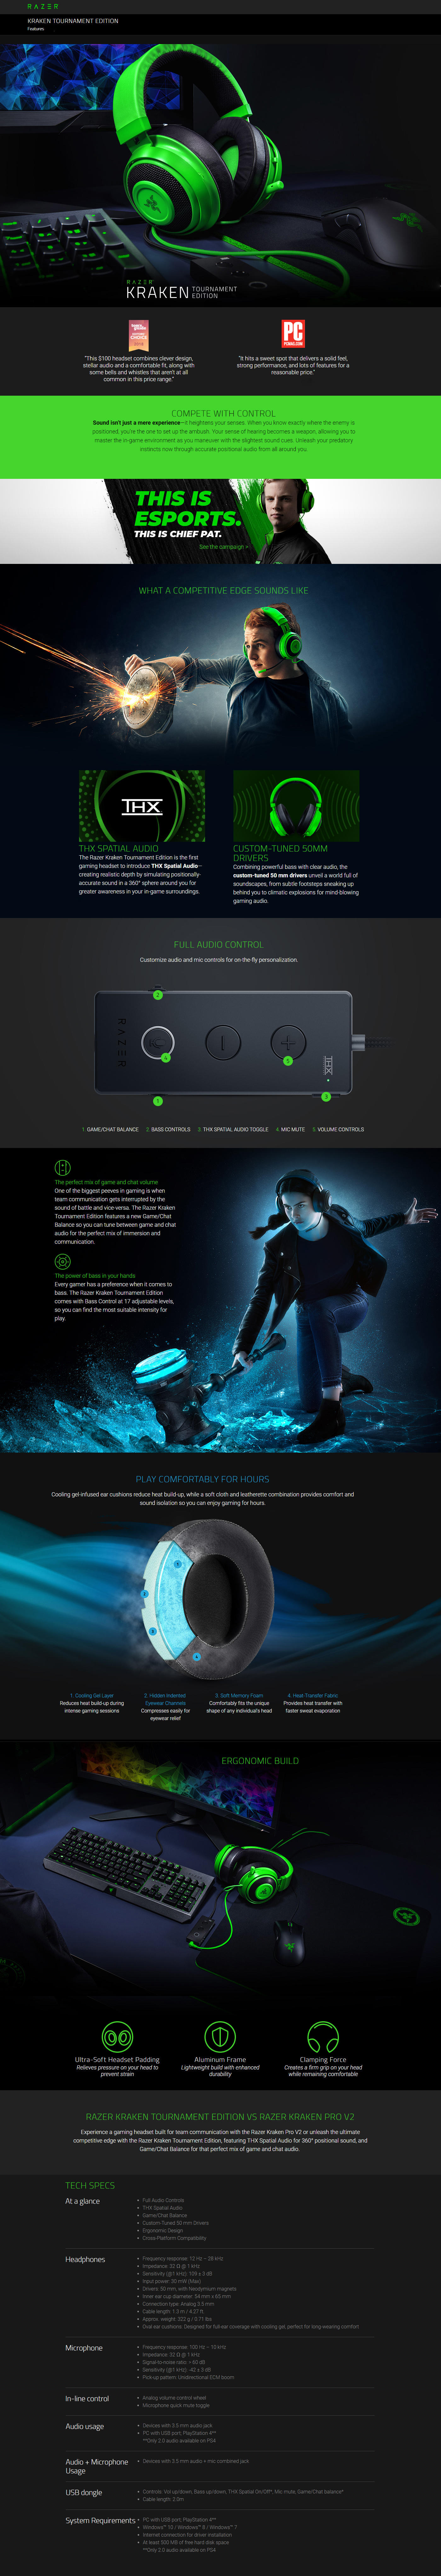 Buy Online Razer Kraken Tournament Edition - Wired Gaming Headset with USB Audio Controller - Green (RZ04-02051100-R3M1)